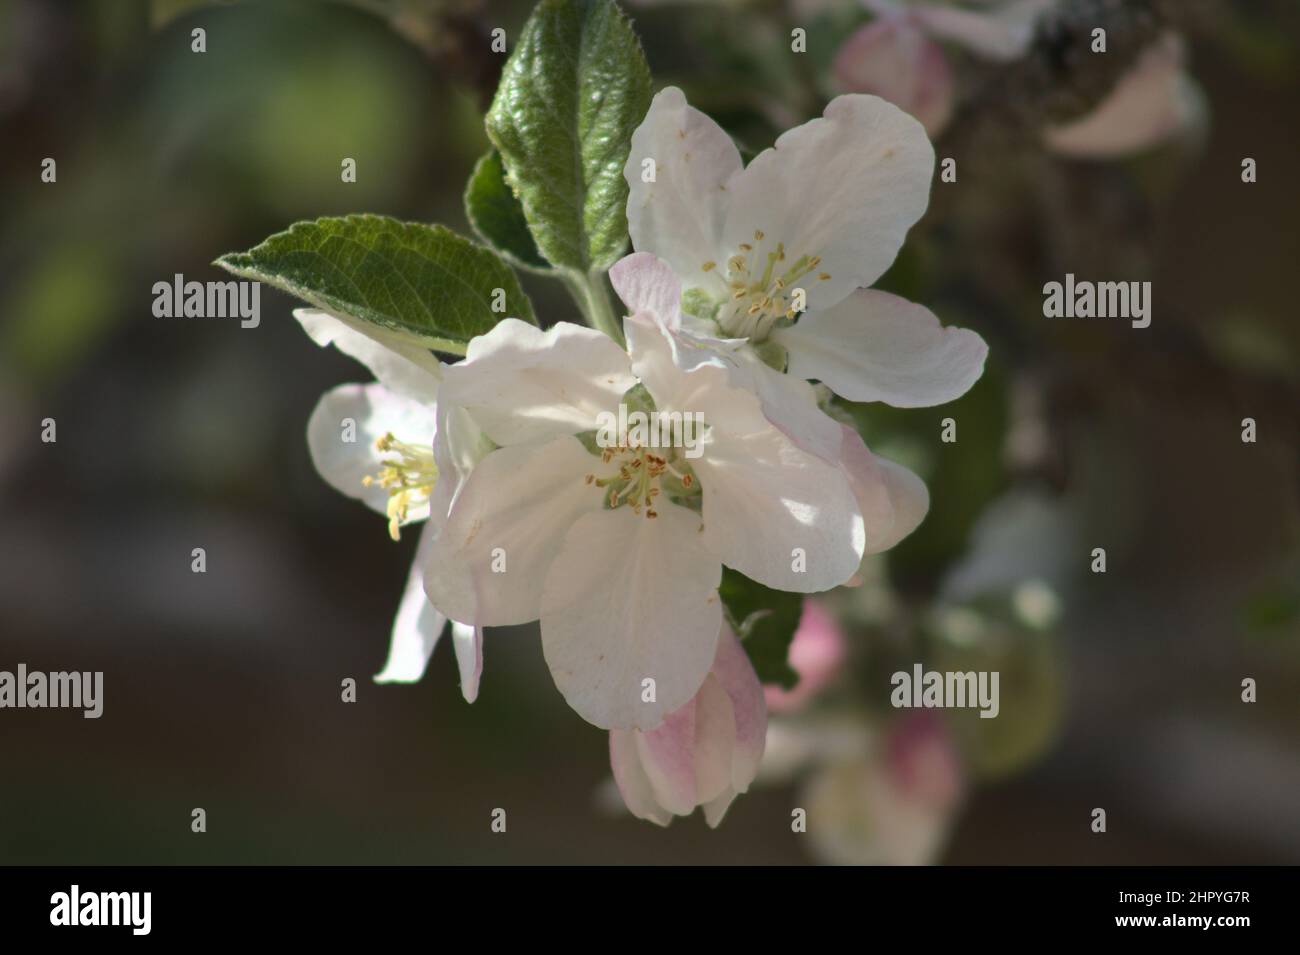 Closeup of tiny white acantholimon flowers blooming among green needle plants Stock Photo